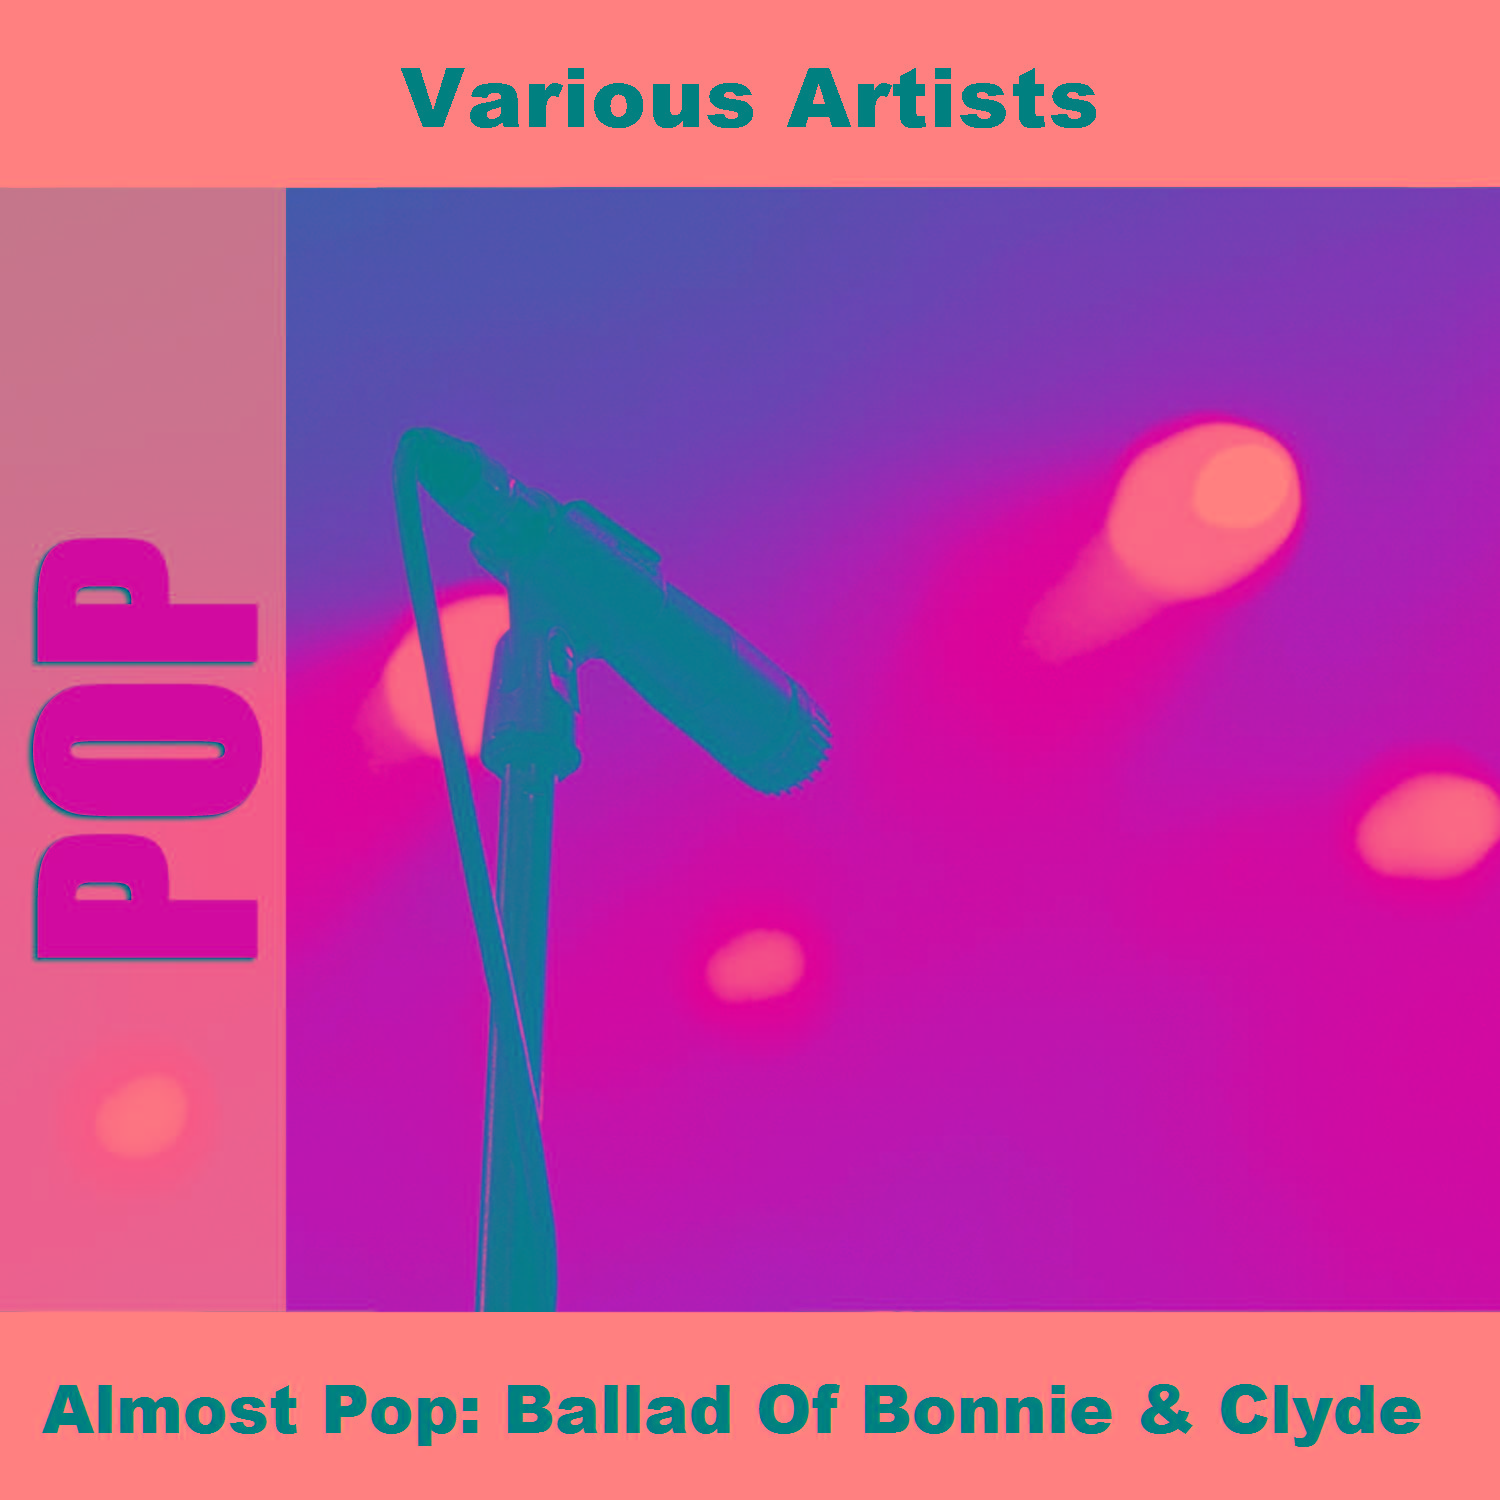 Almost Pop: Ballad Of Bonnie & Clyde